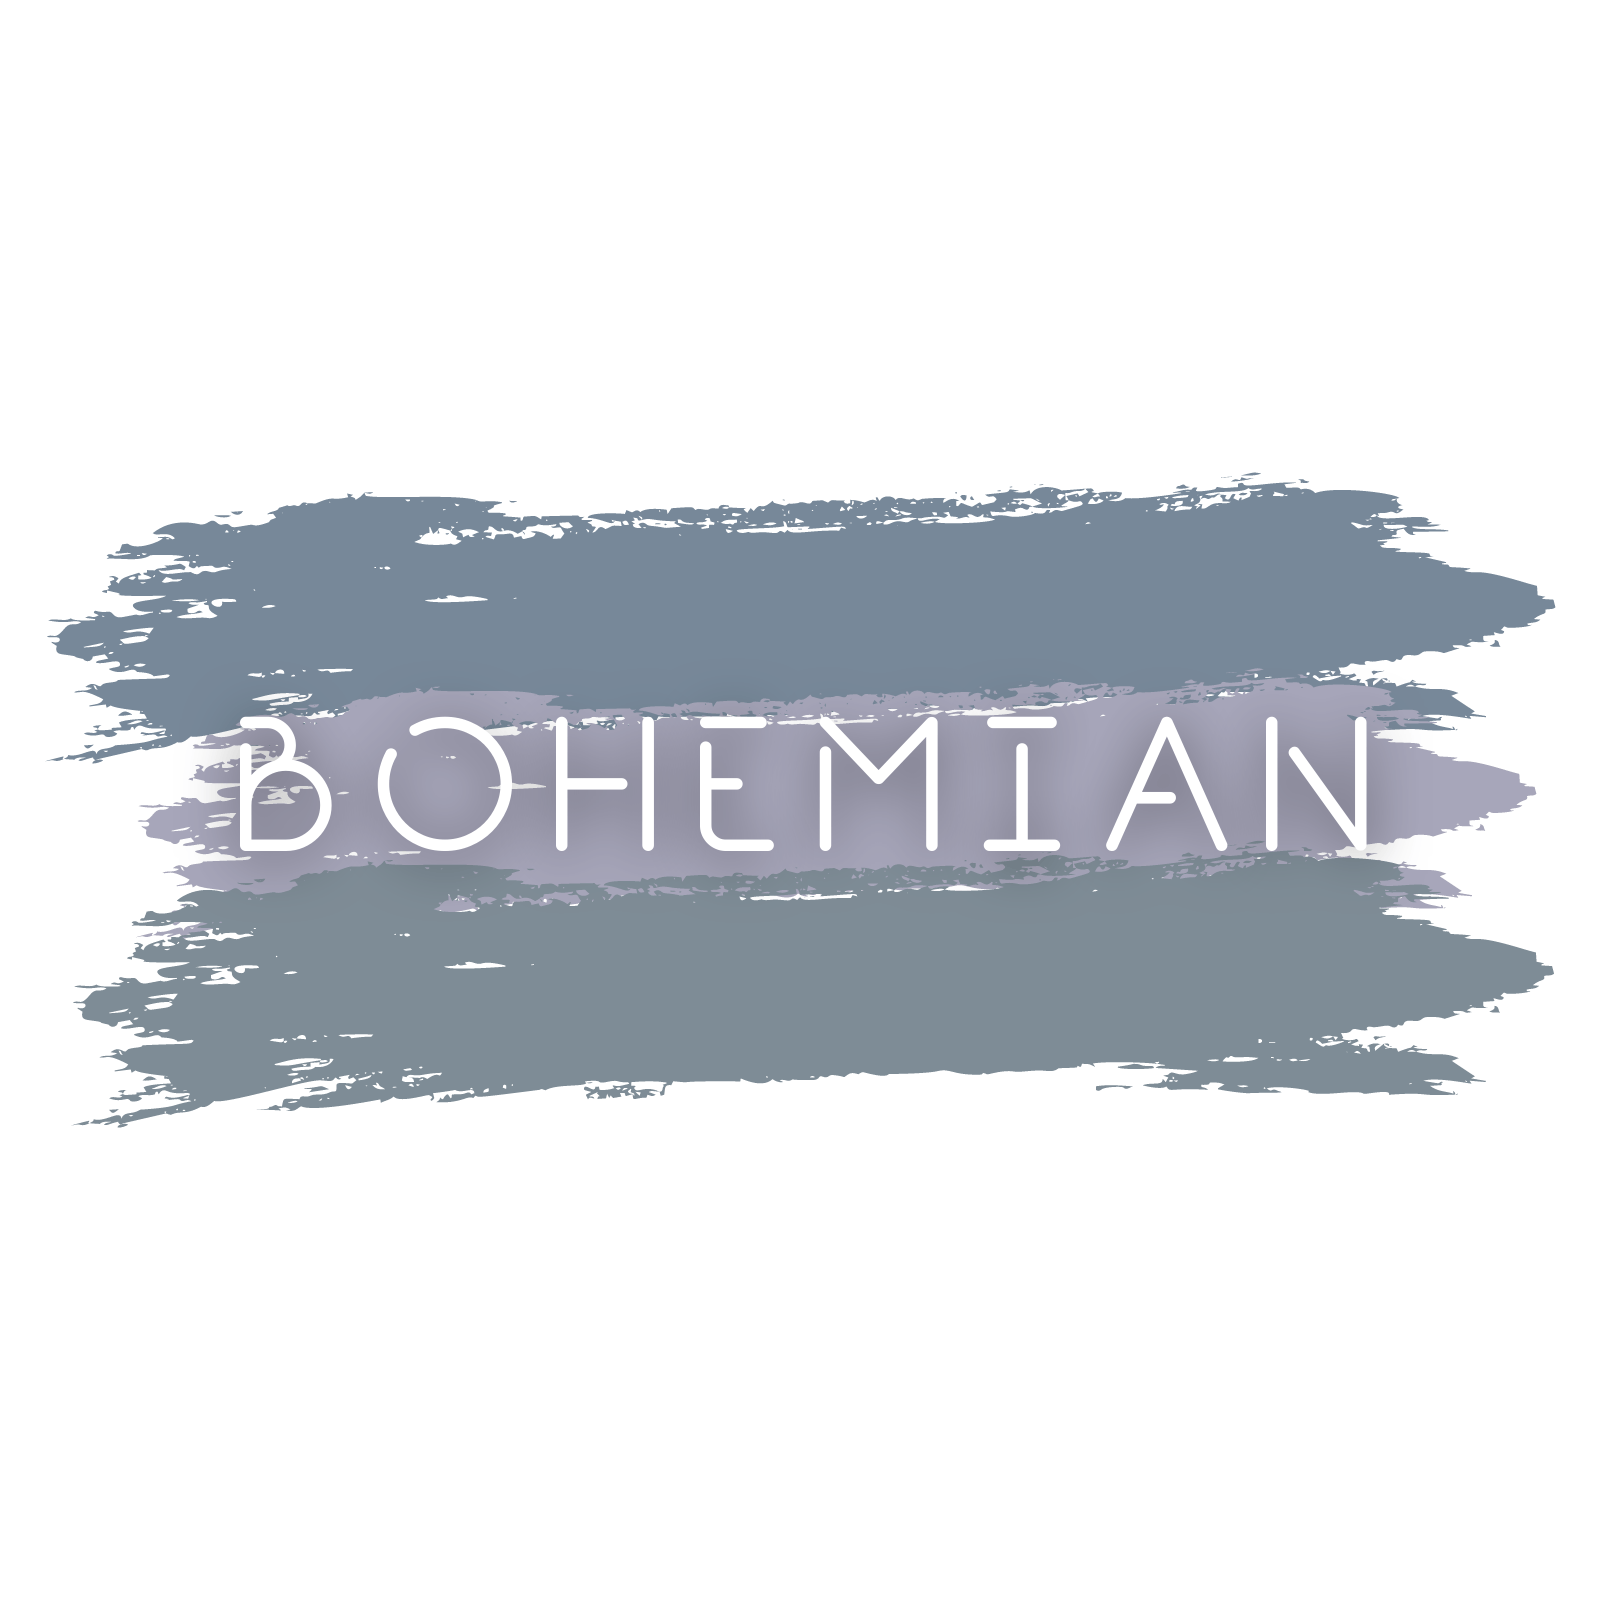 Bohemian - Ken Adams